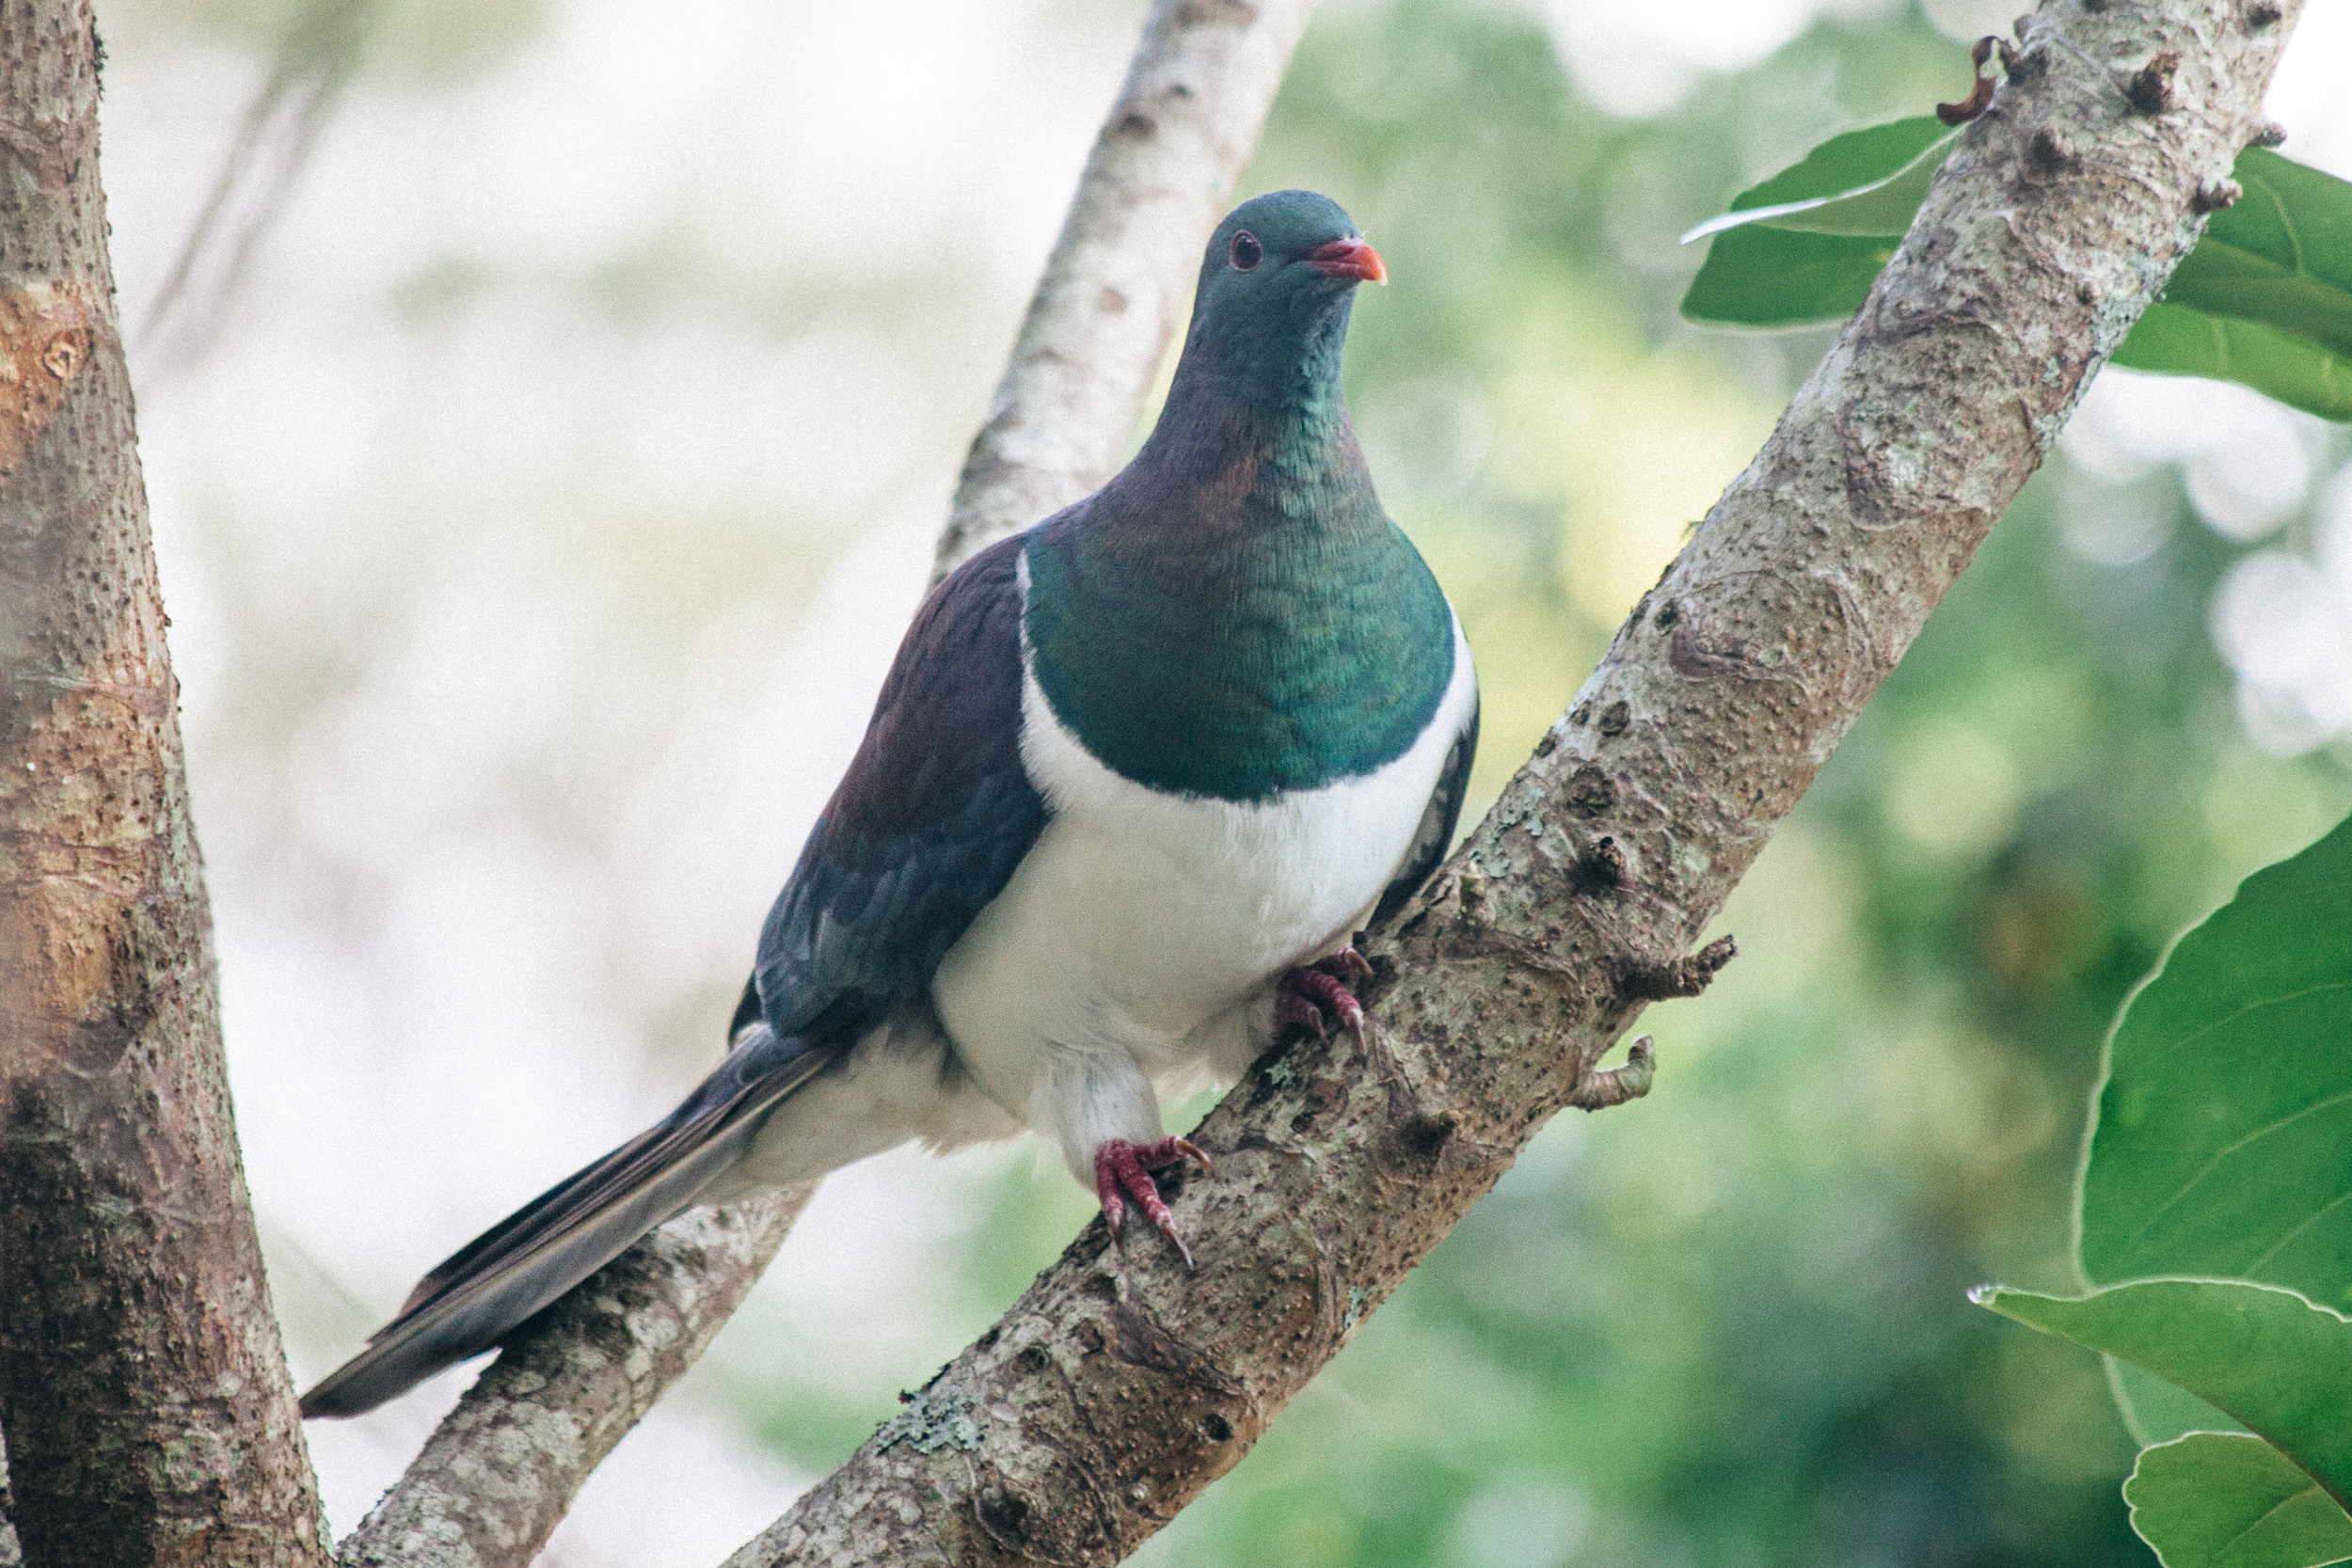 Kereru (NZ wood pigeon) by Leonie Wise